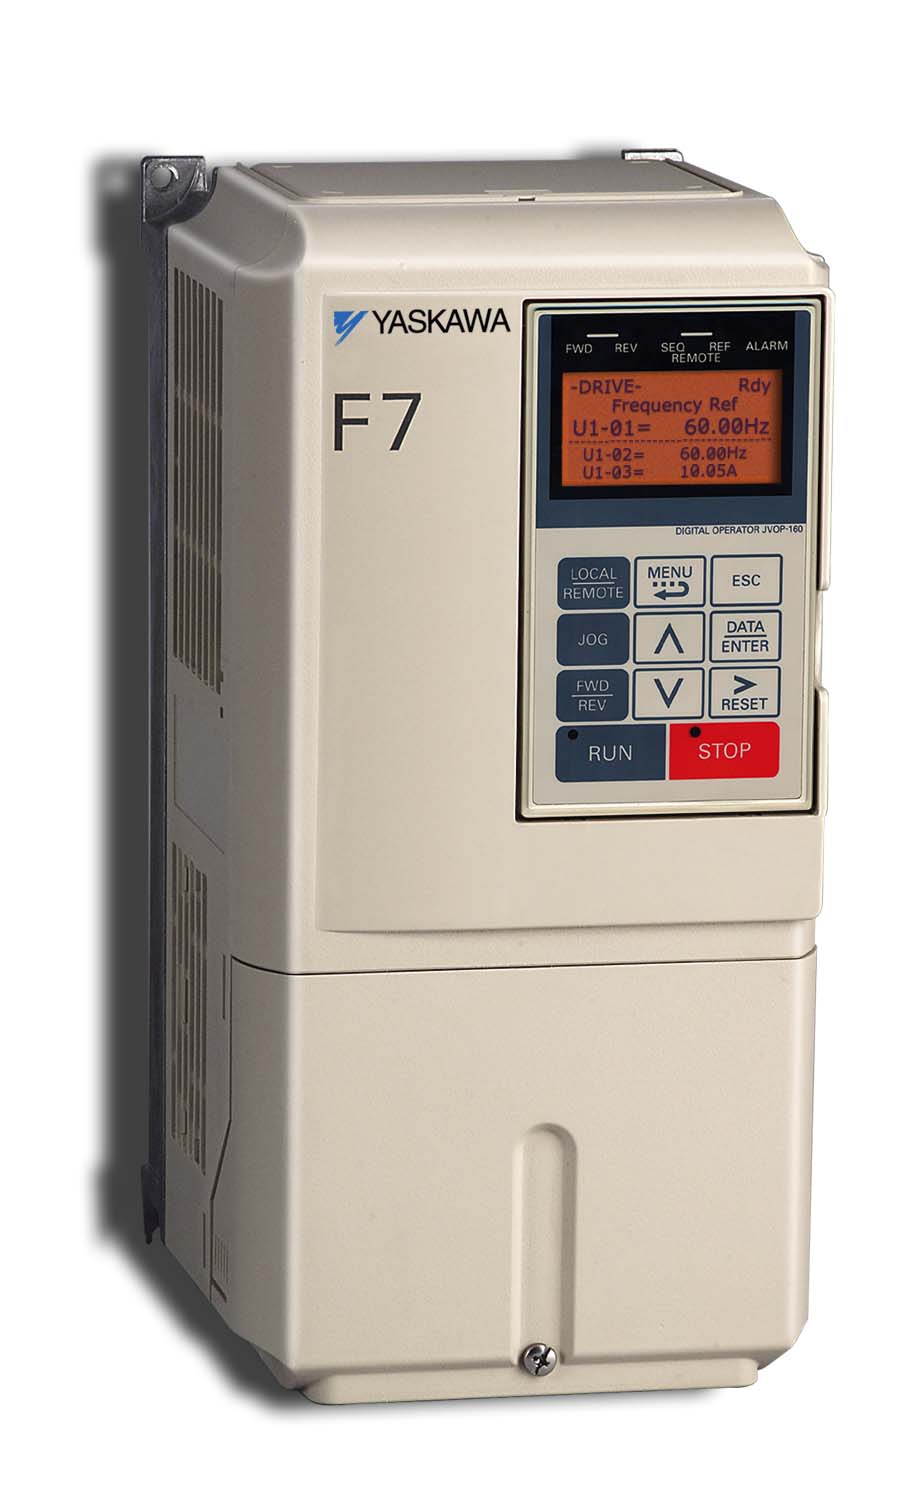 Yaskawa F7 drives frequency inverter VFD